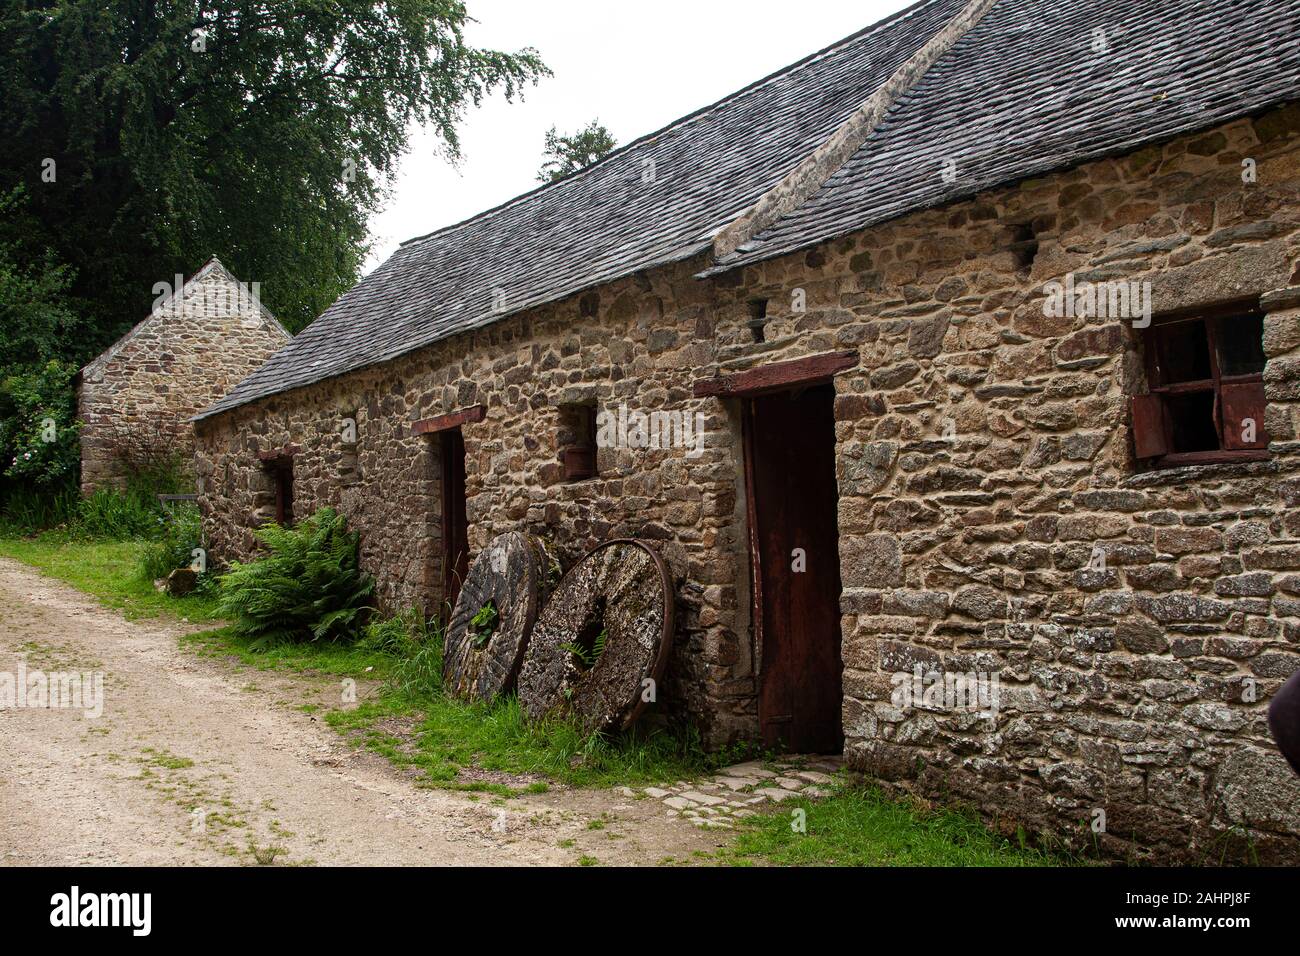 France, Brittany, Comanna,  Les Moulins de Kerouat,  1619 monastic village of hide tanning, milling, stone mills, grains, Stock Photo